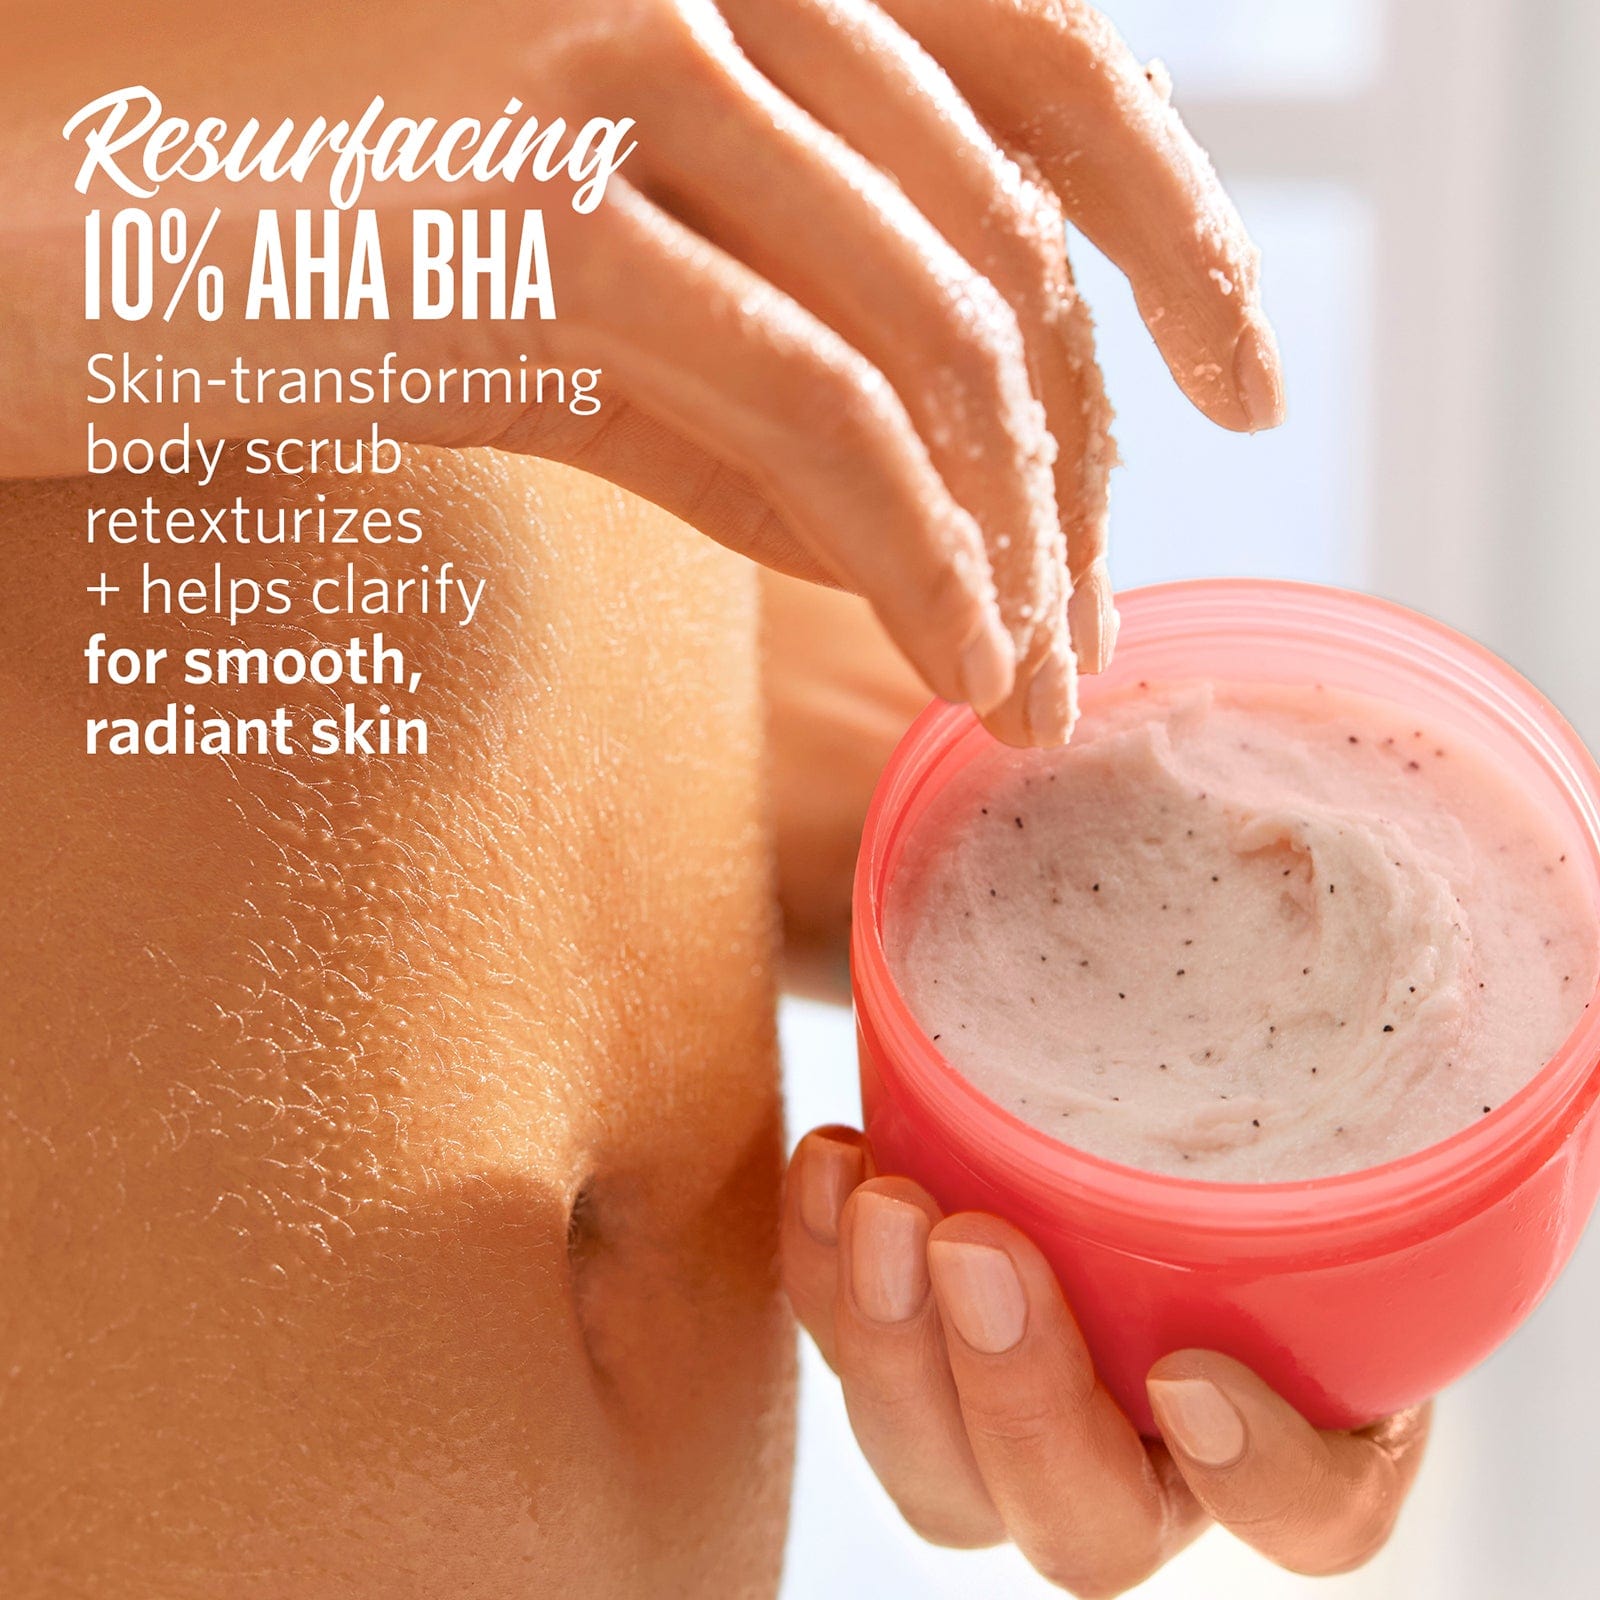 Resurfacing 10% AHA BHA - Skin-transforming body scrub retexturizes and helps clarify for smooth, radiant skin